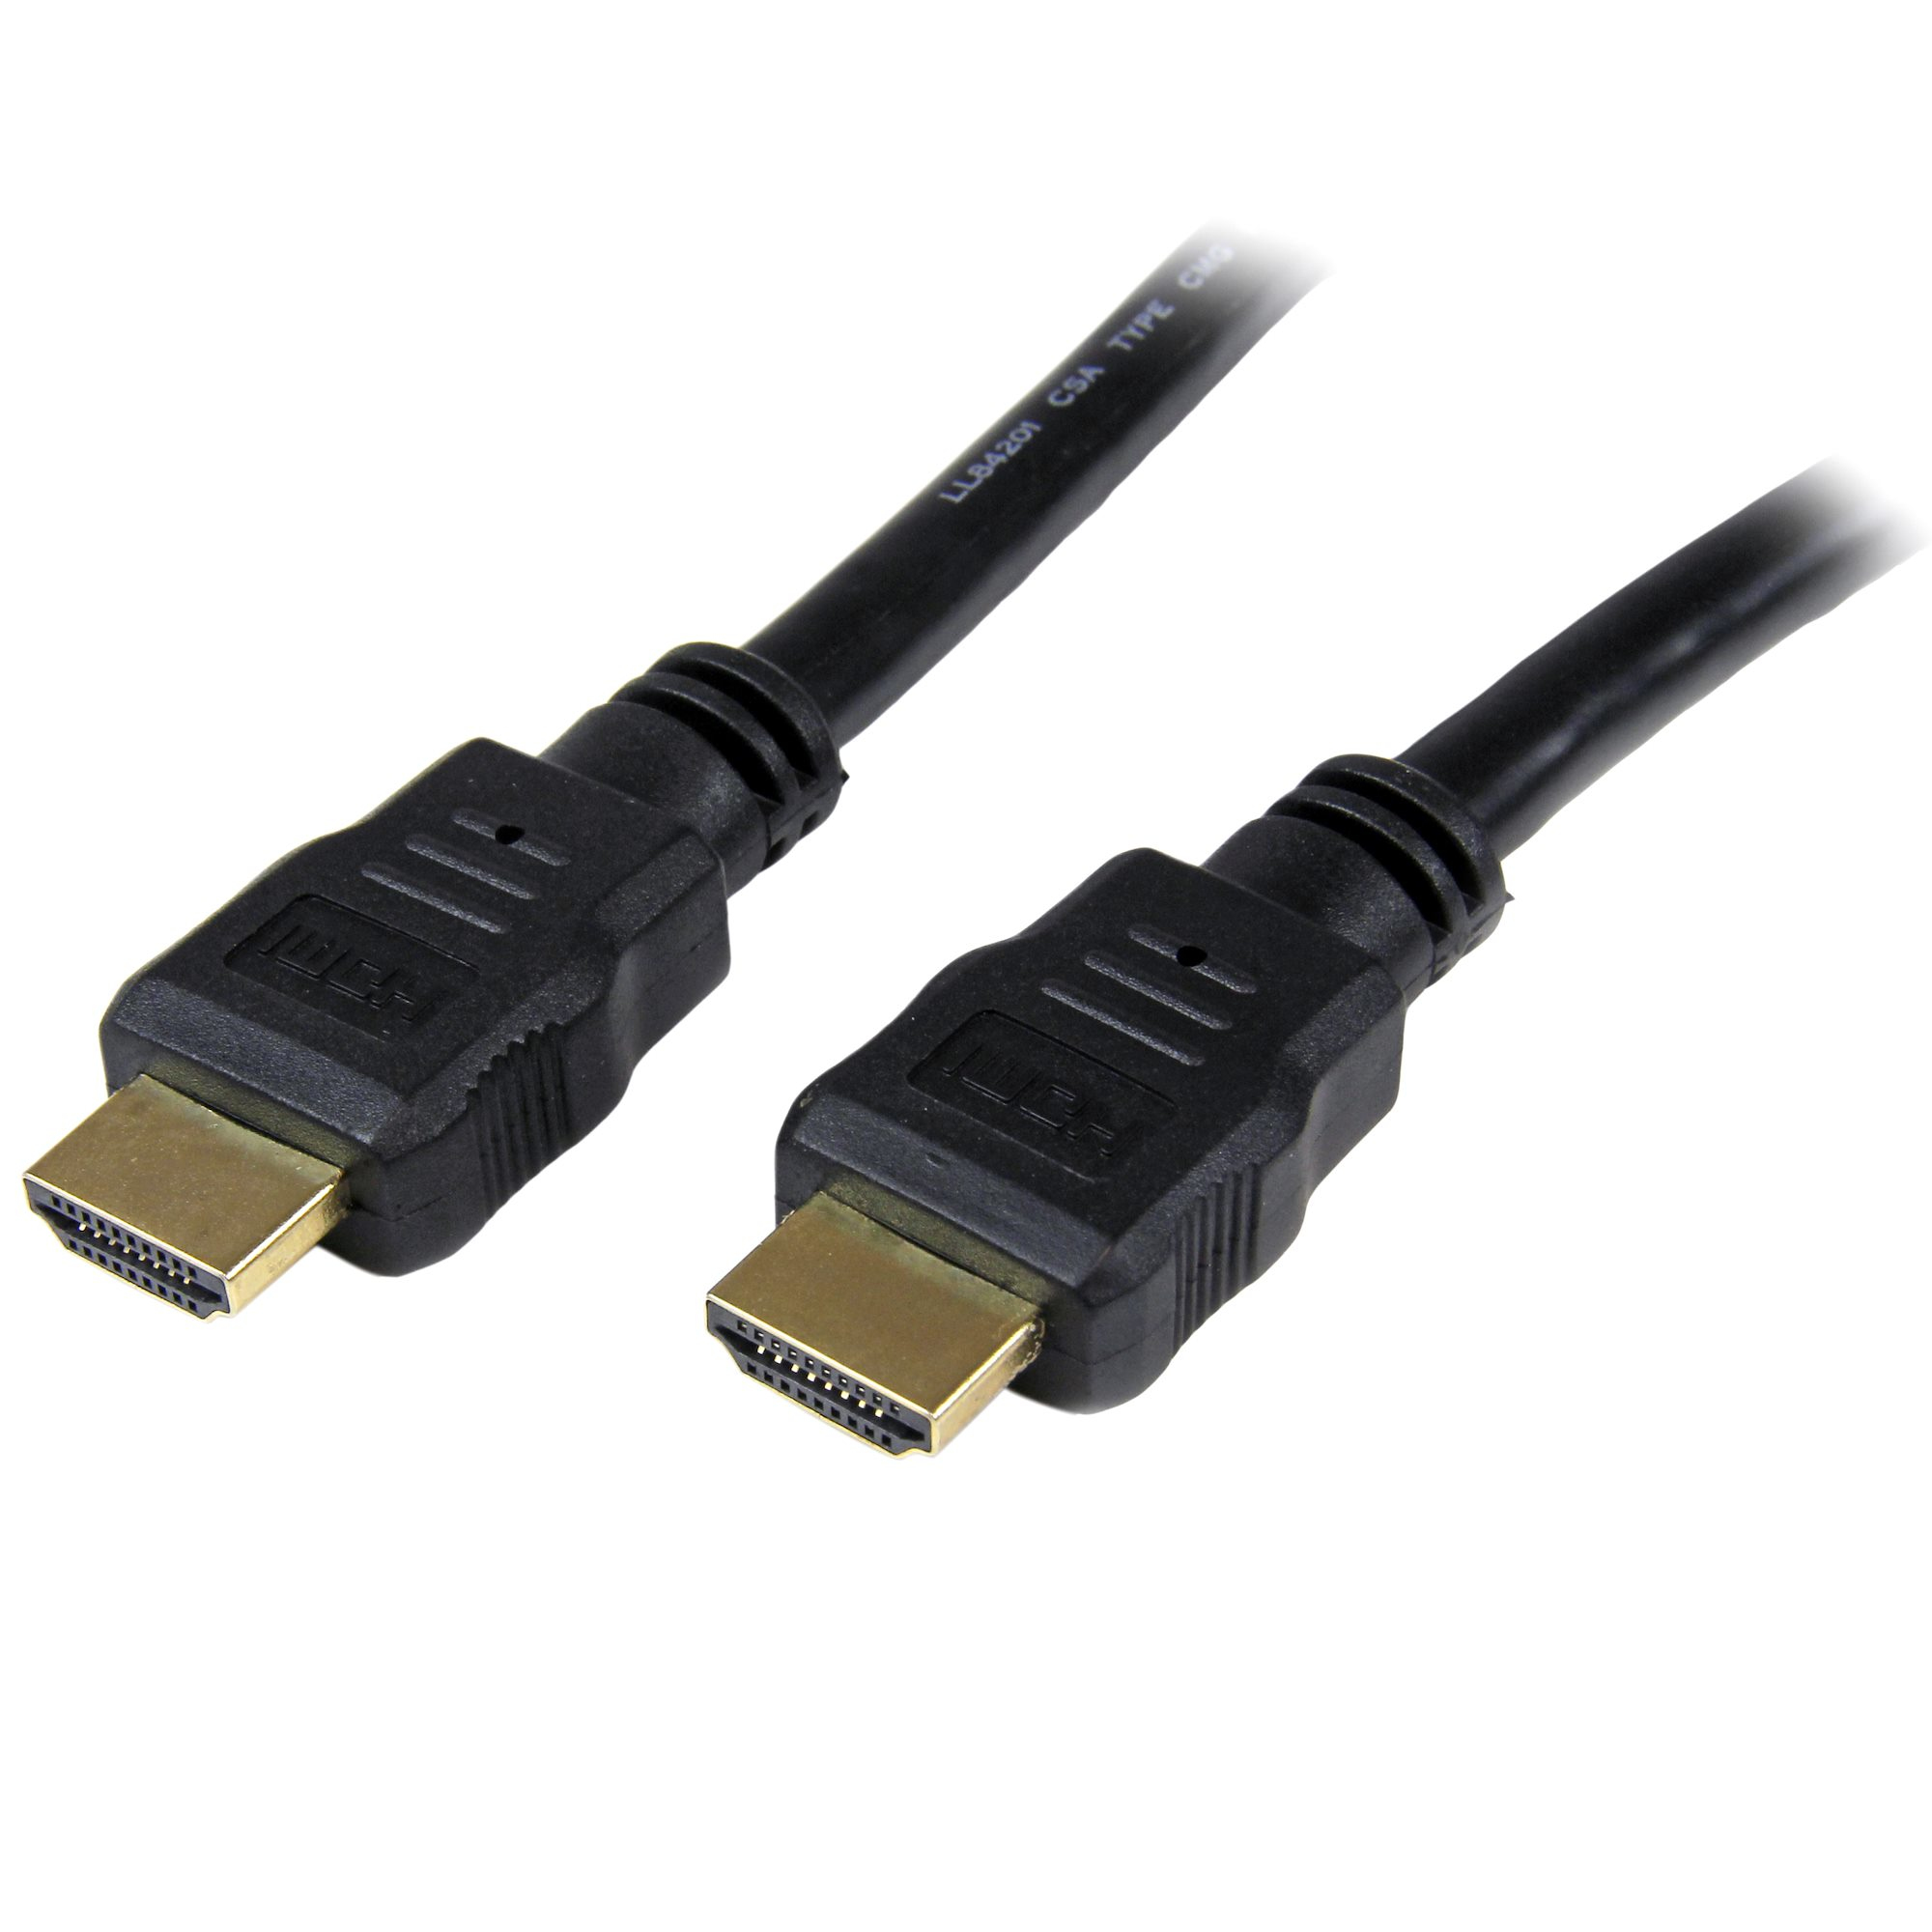 StarTech.com High-Speed-HDMI-Kabel 1m - HDMI Verbindungskabel Ultra HD 4k x 2k mit vergoldeten Kontakten - HDMI Anschlusskabel (St/St)